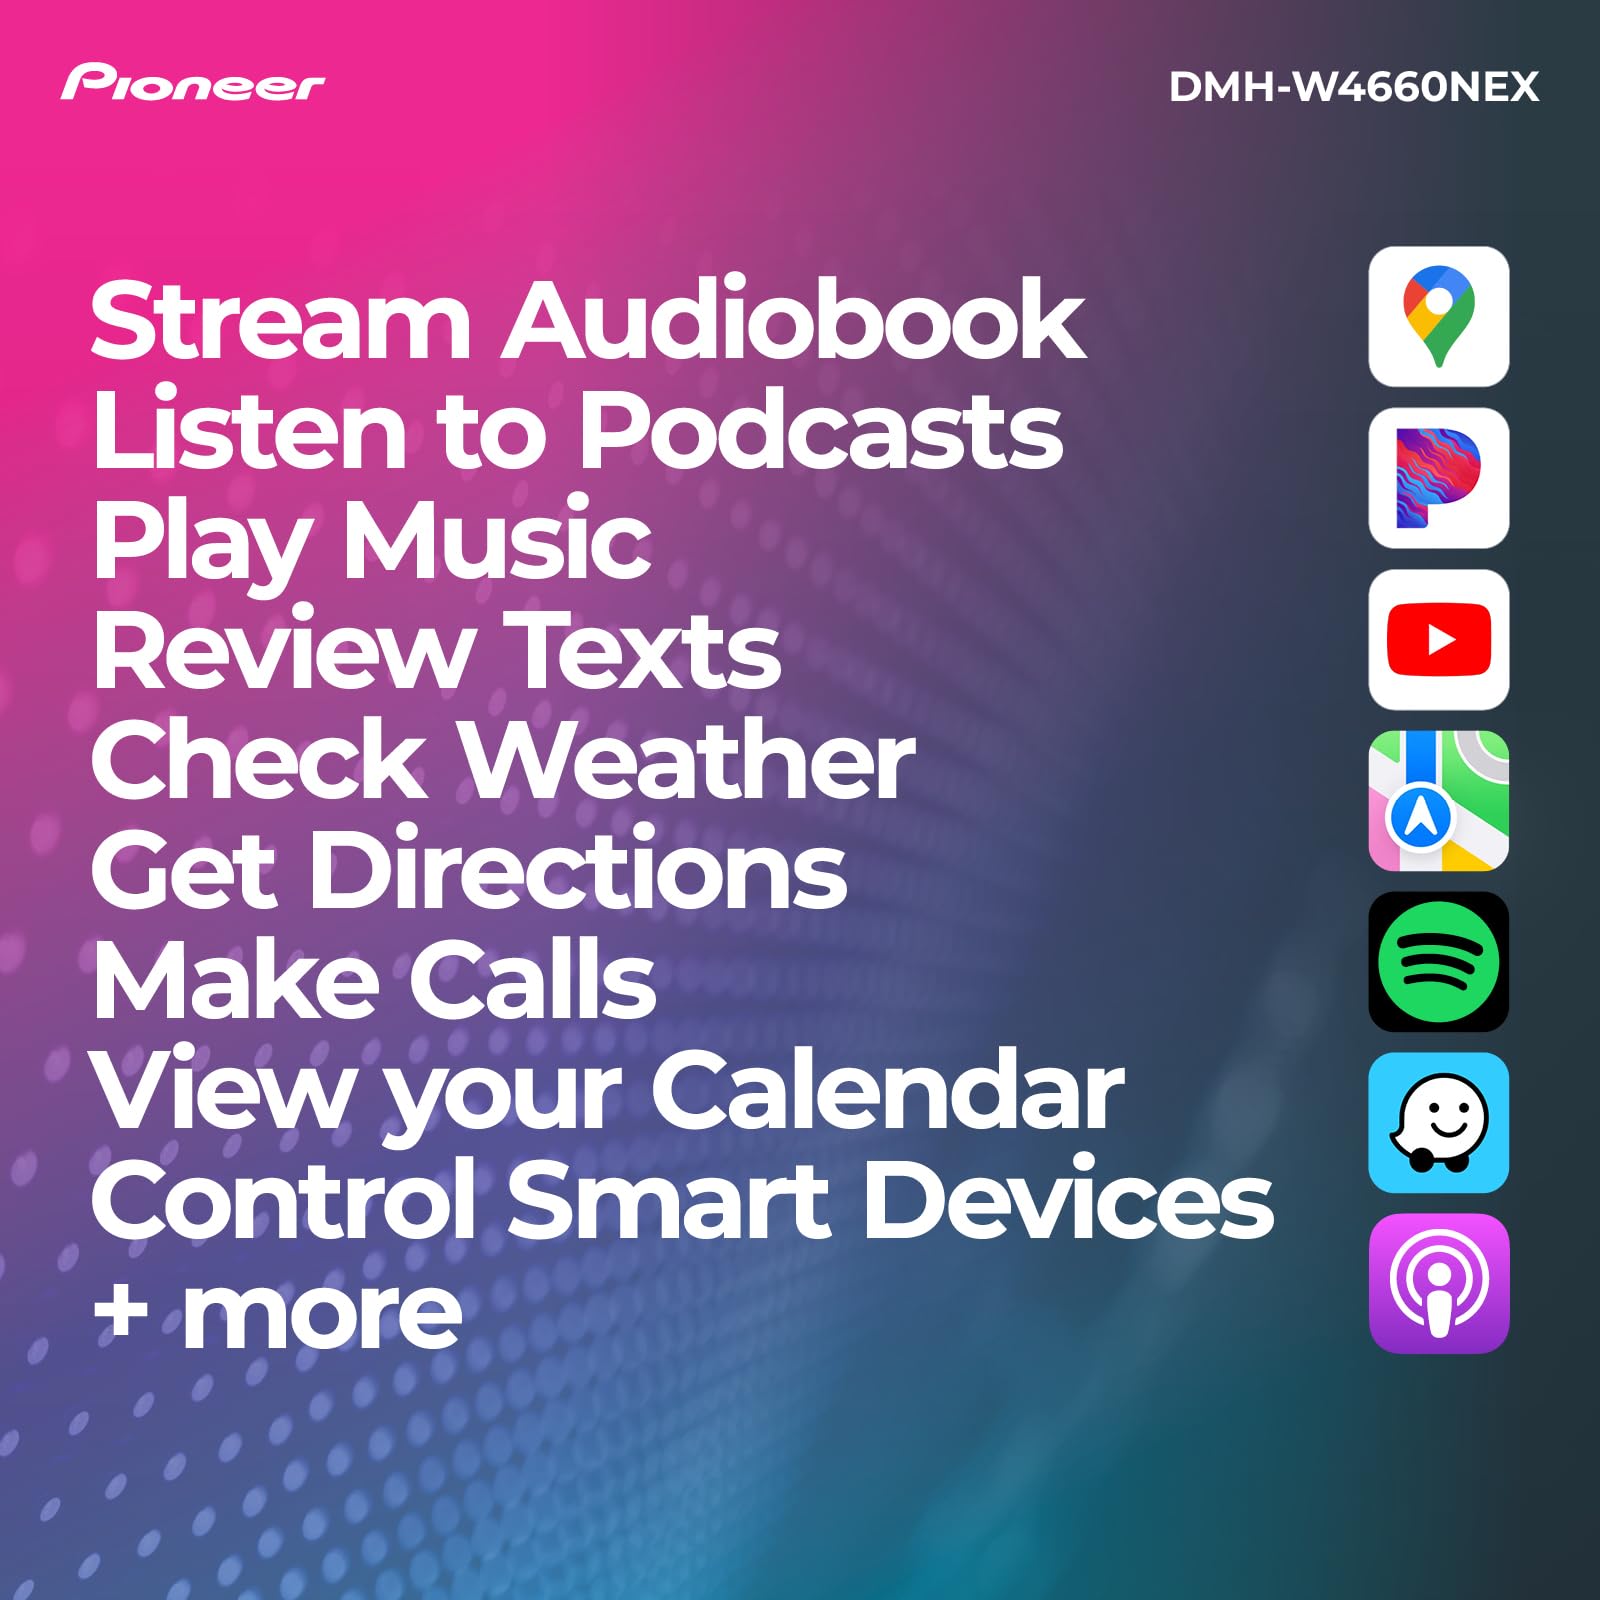 Pioneer DMH-W4660NEX 6.8” – Amazon Alexa Built-in, Android Auto, Apple CarPlay, Bluetooth - Multimedia Digital Media Receiver, Black